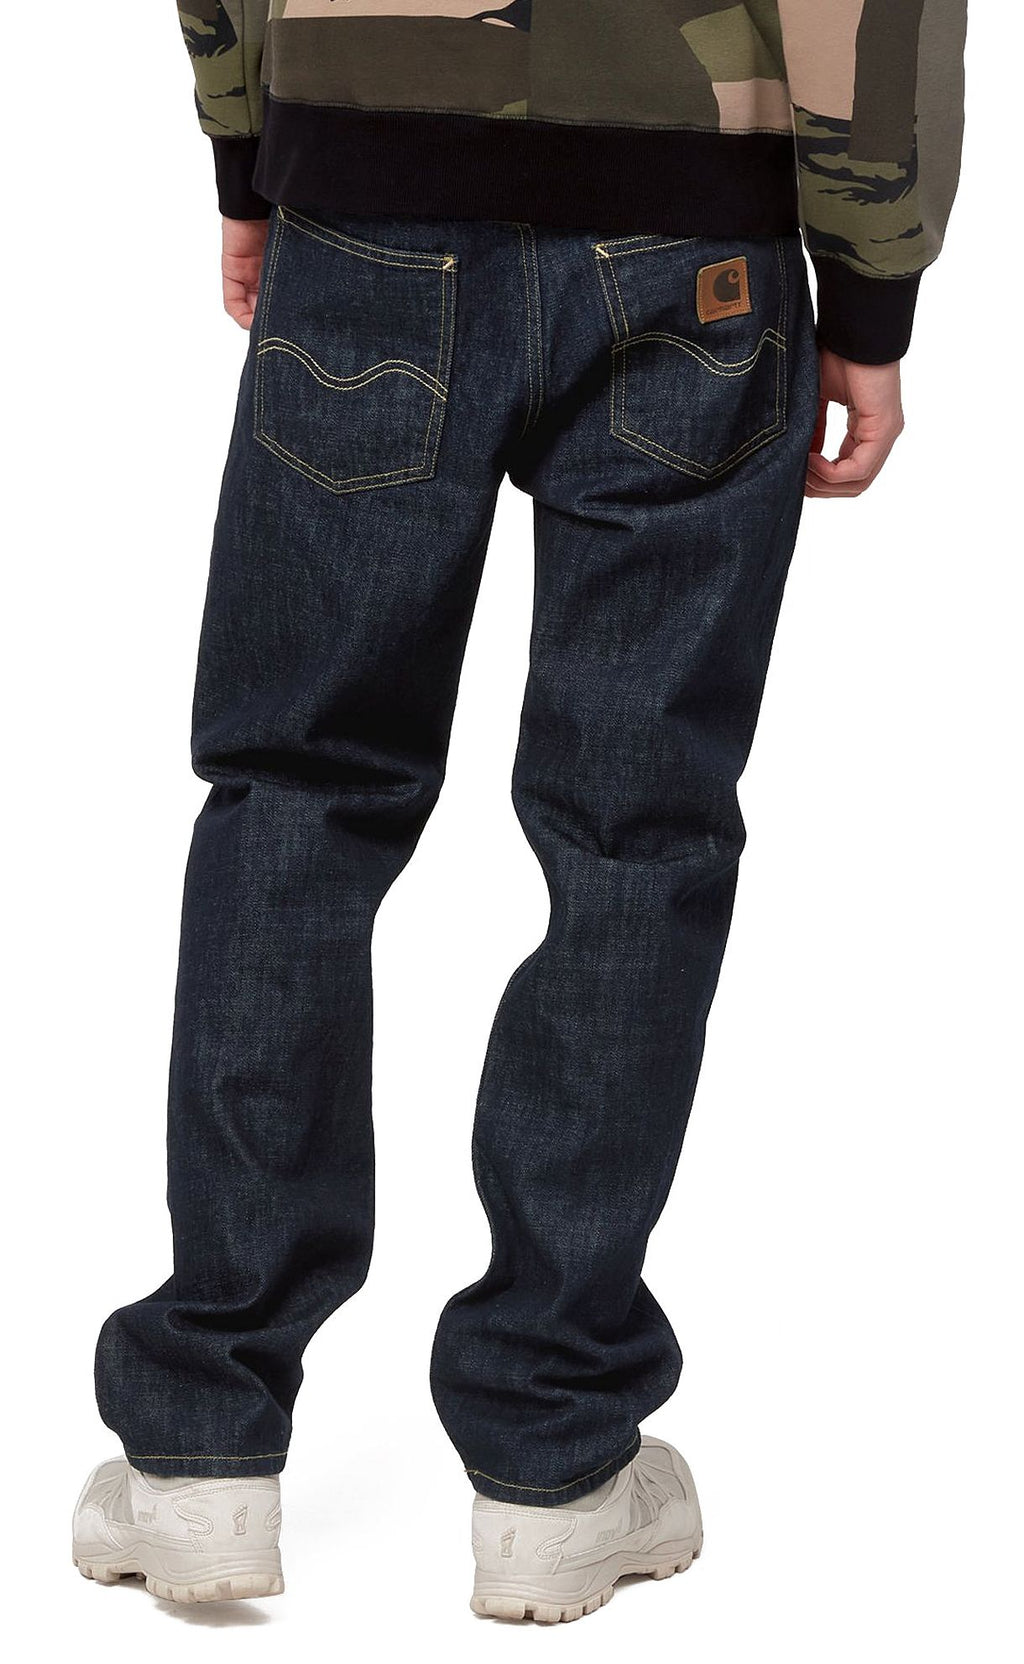  Carhartt Wip Pantaloni Jeans Marlow Pant Blue Rinsed Uomo - 4